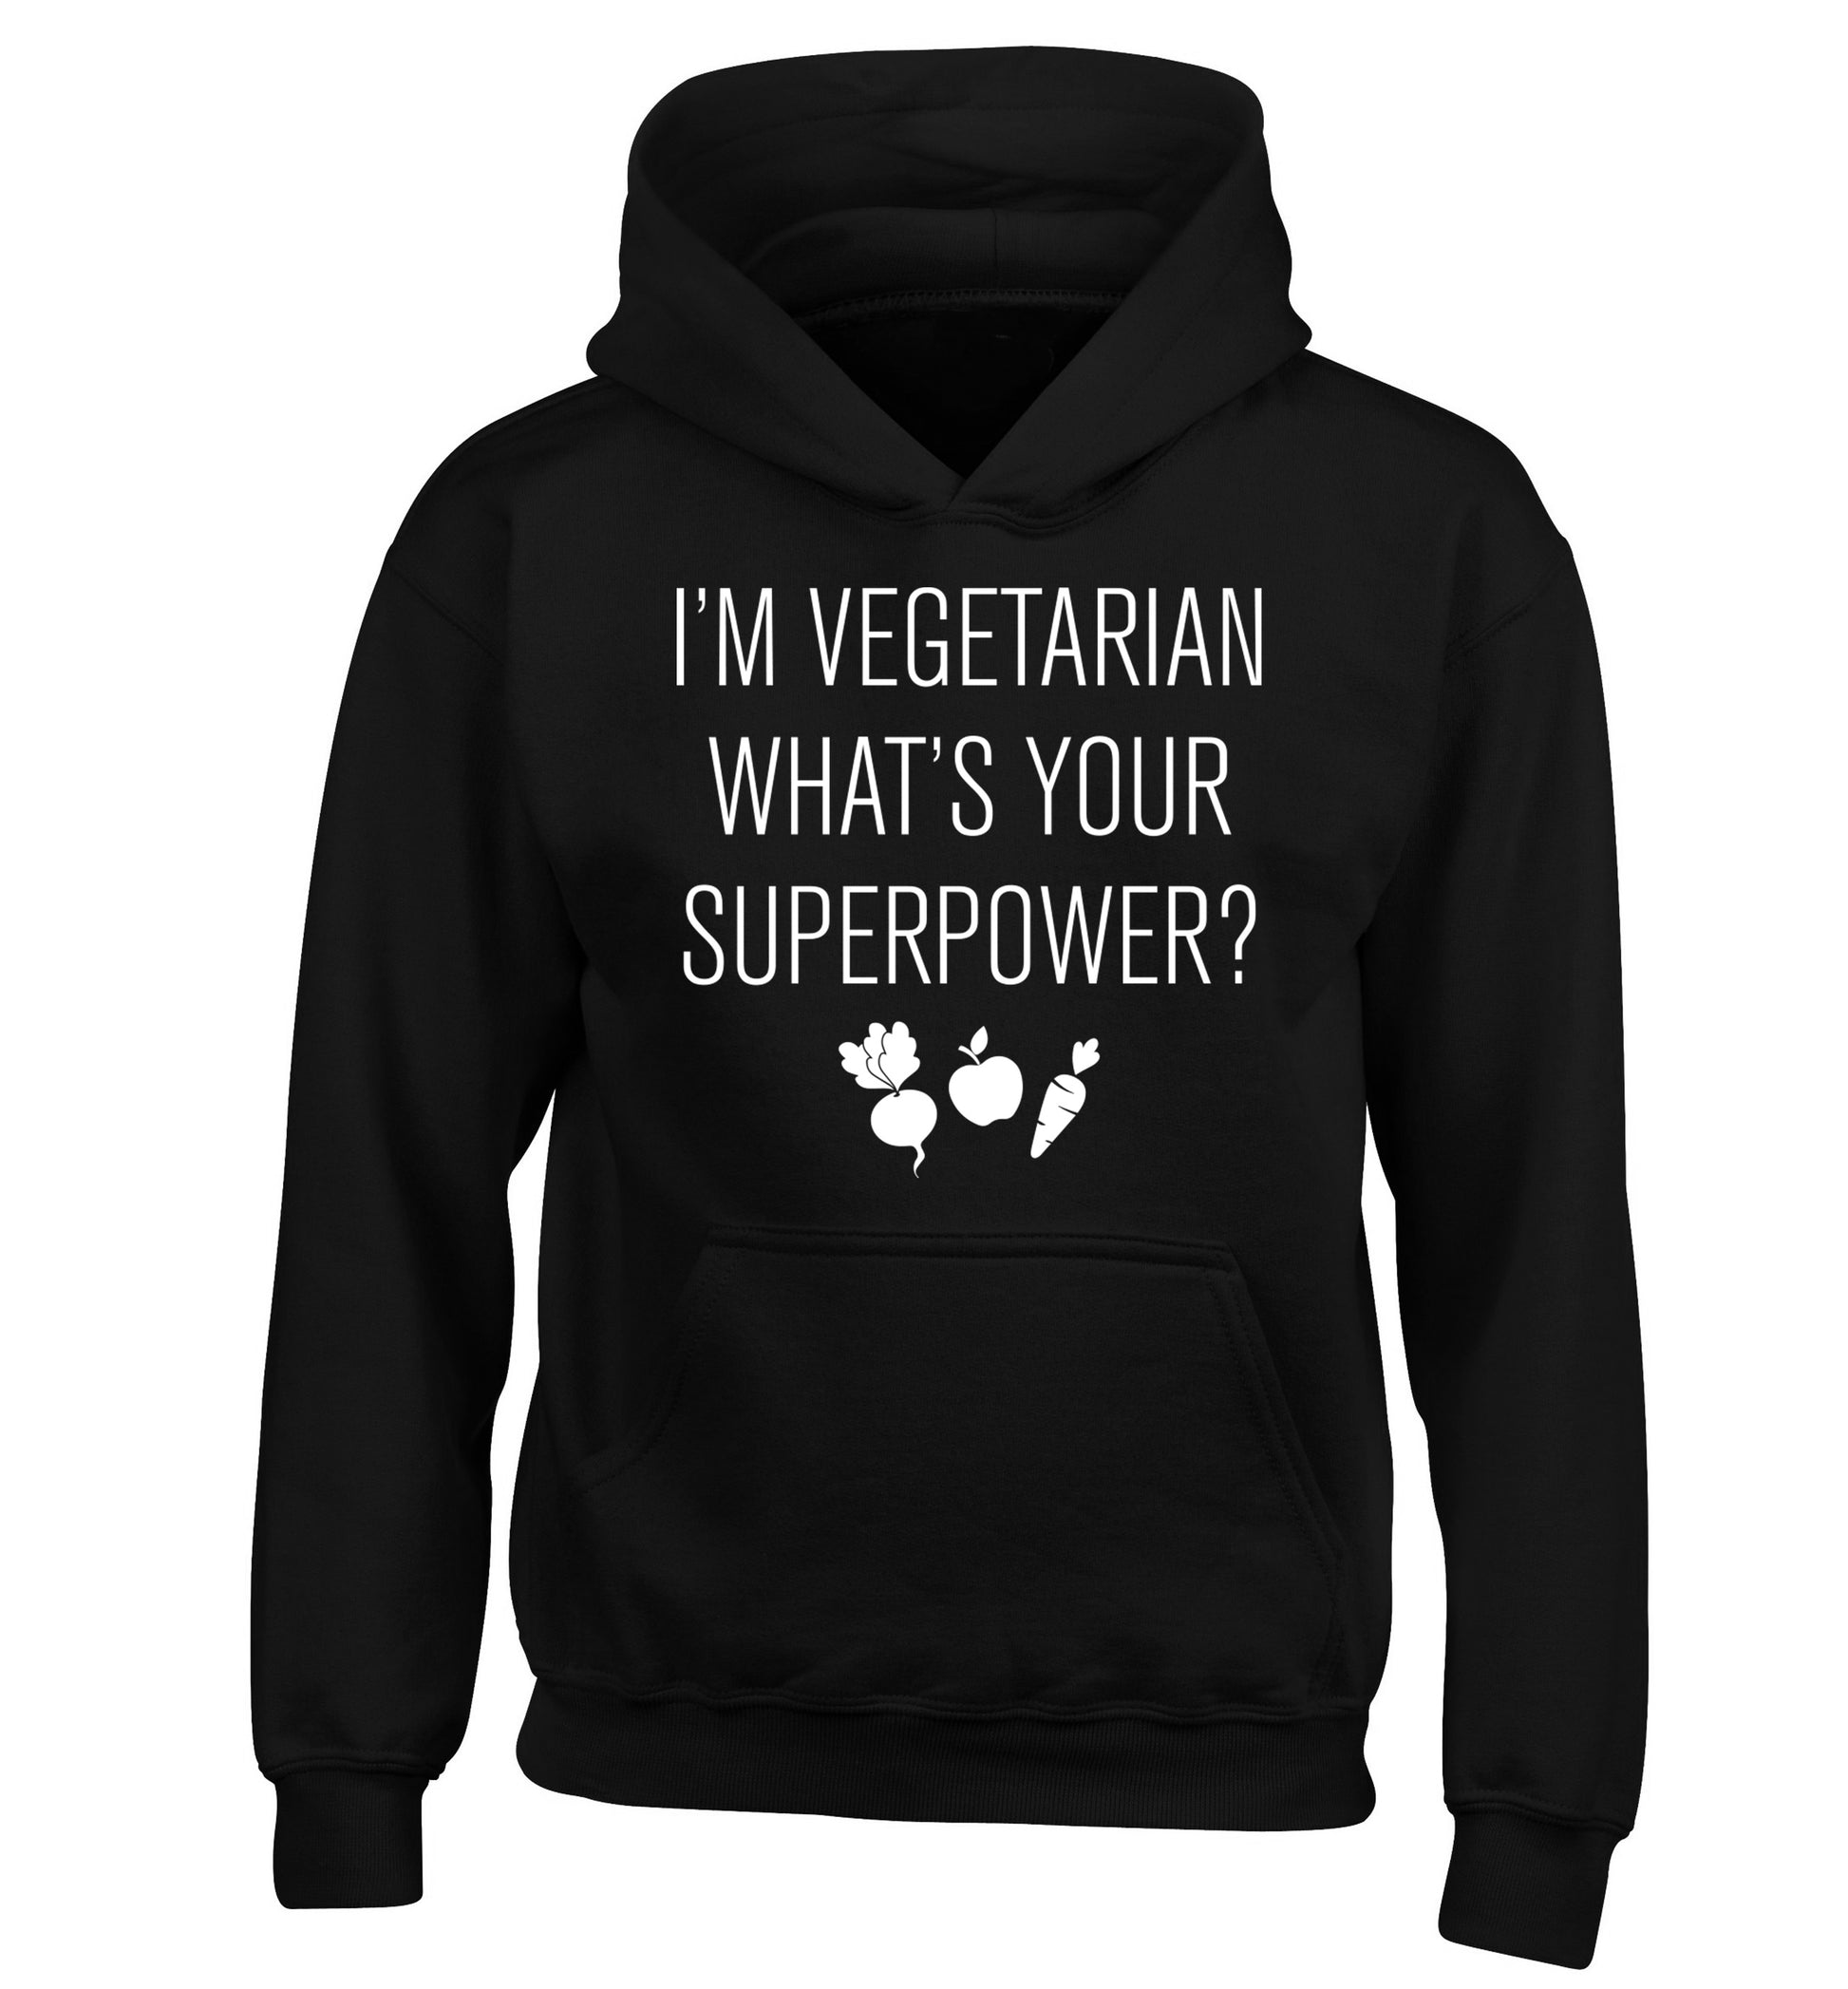 I'm vegetarian what's your superpower? children's black hoodie 12-13 Years